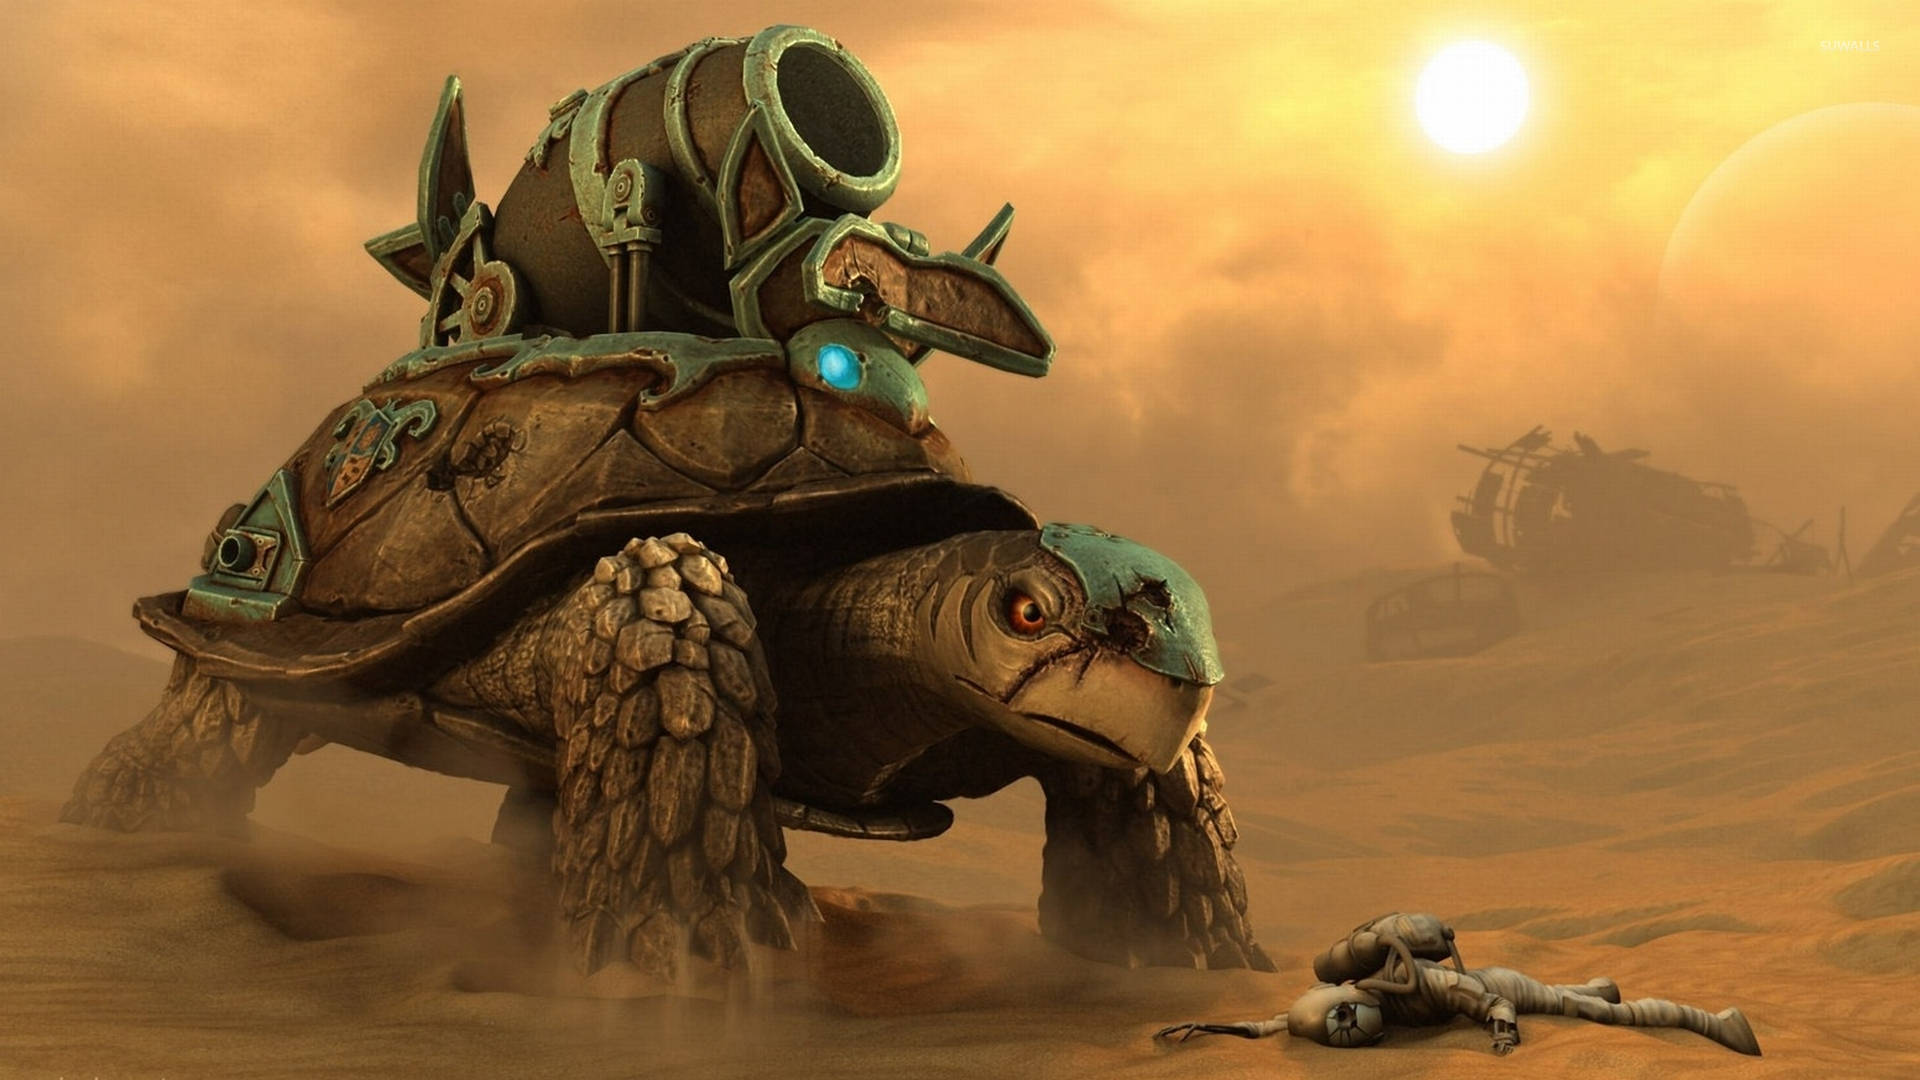 Cool Turtle Fantasy In Desert Background